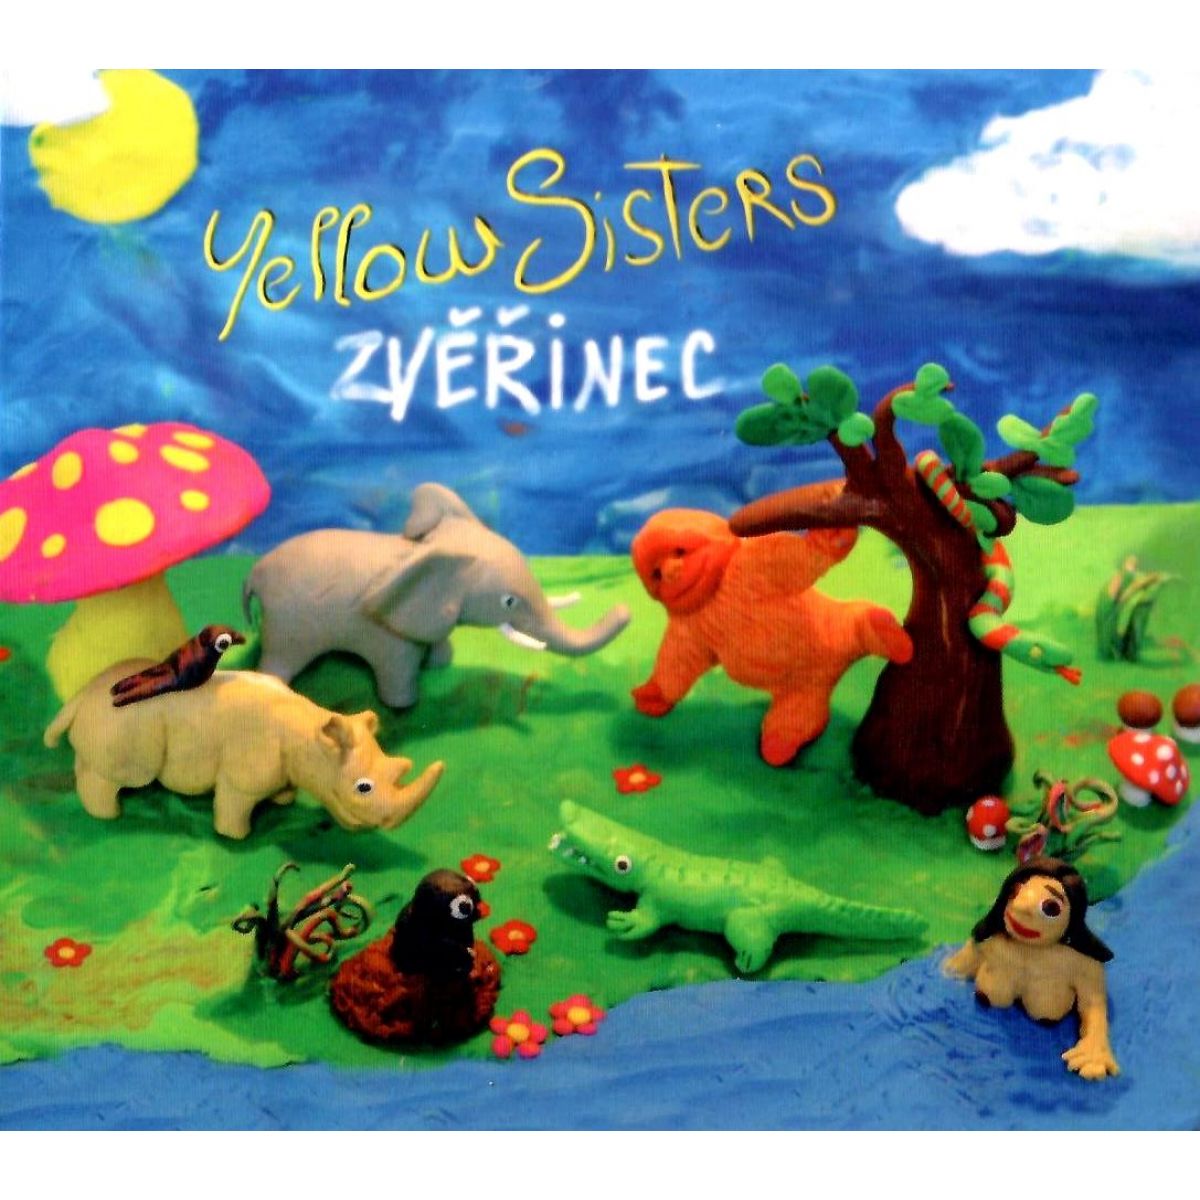 Zverinec Yellow Sistters CD